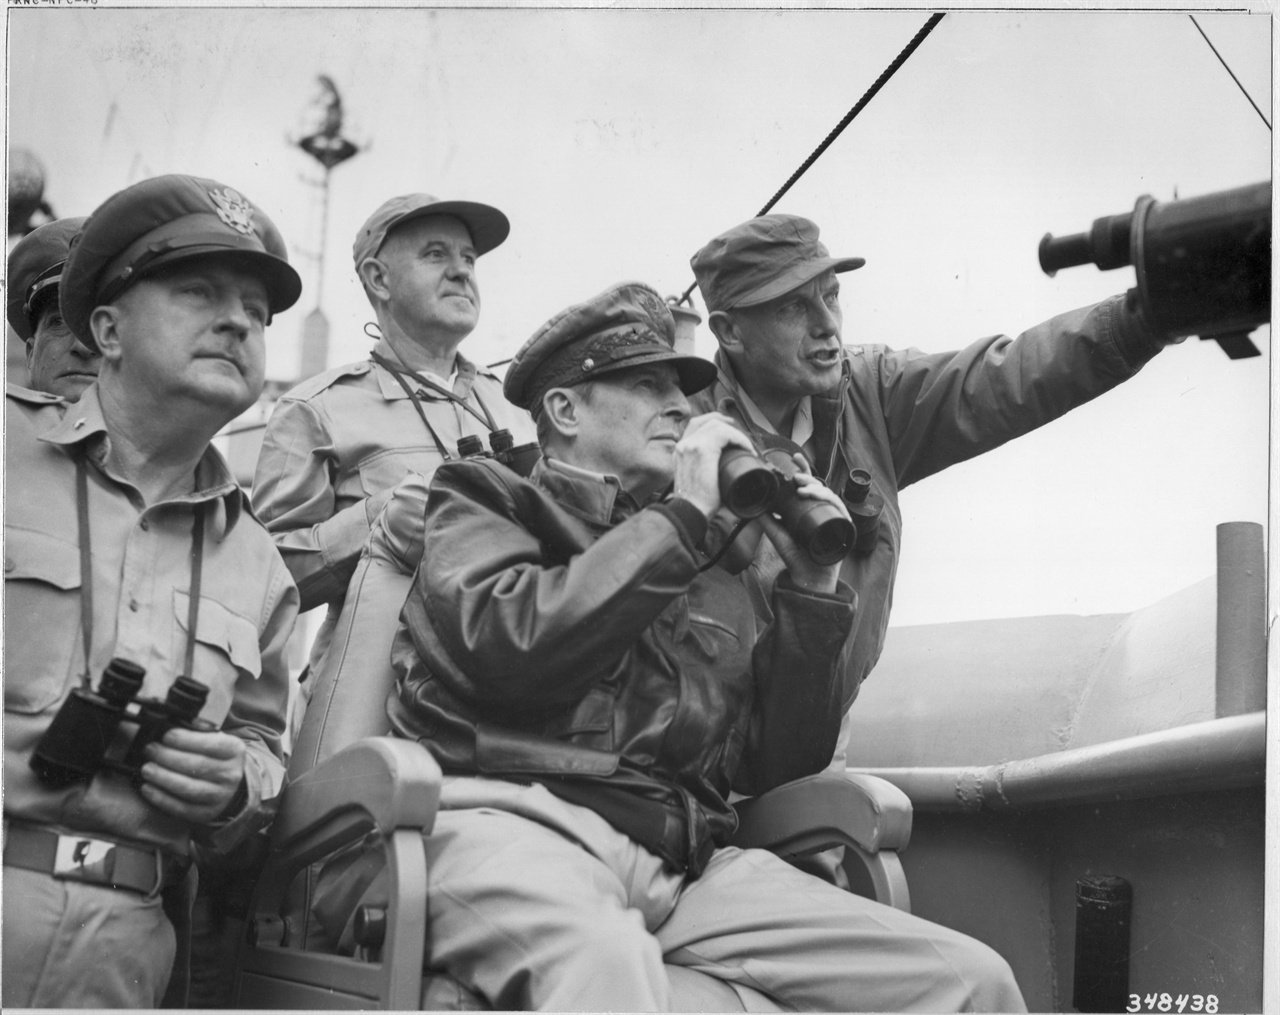 1950. 9. 14. Mountain Mckinley 함상에서 상륙지점을 바라보는 맥아더 장군.